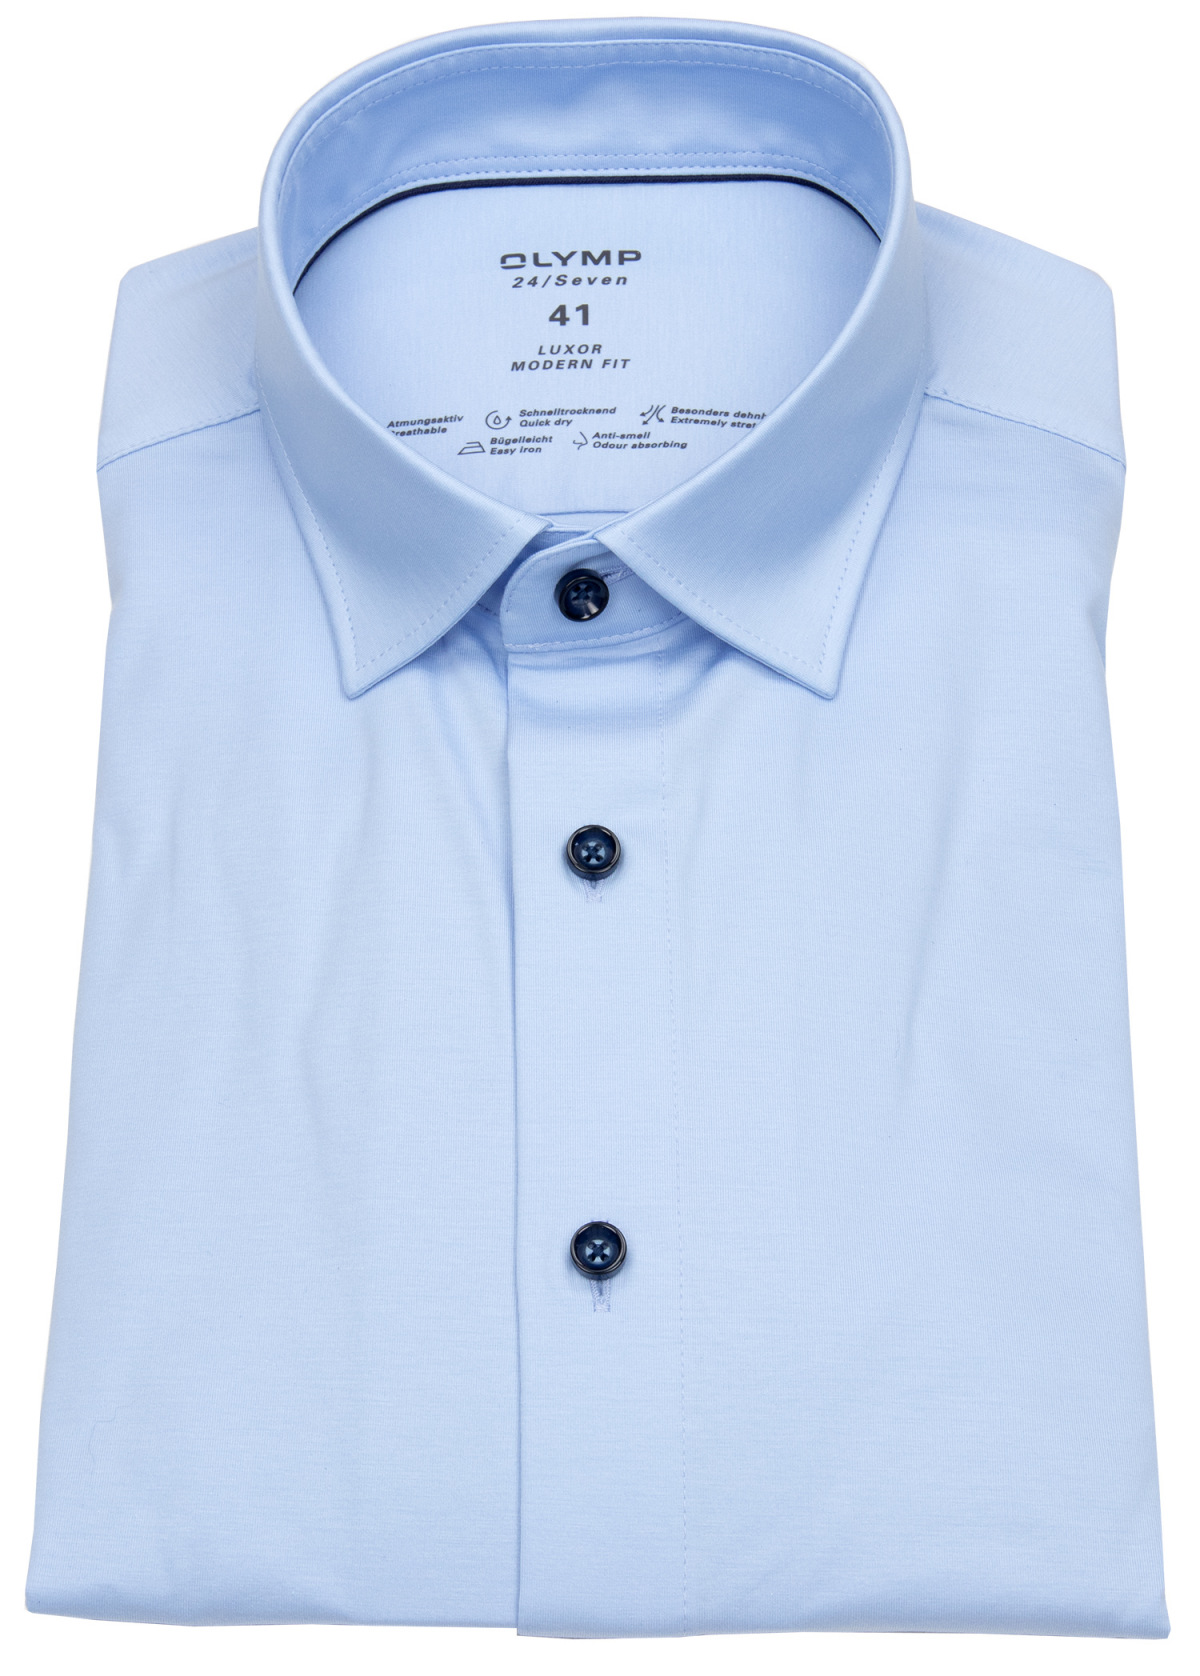 OLYMP Hemd - Modern 24 Shirt - Time Fit - Seven - / hellblau All